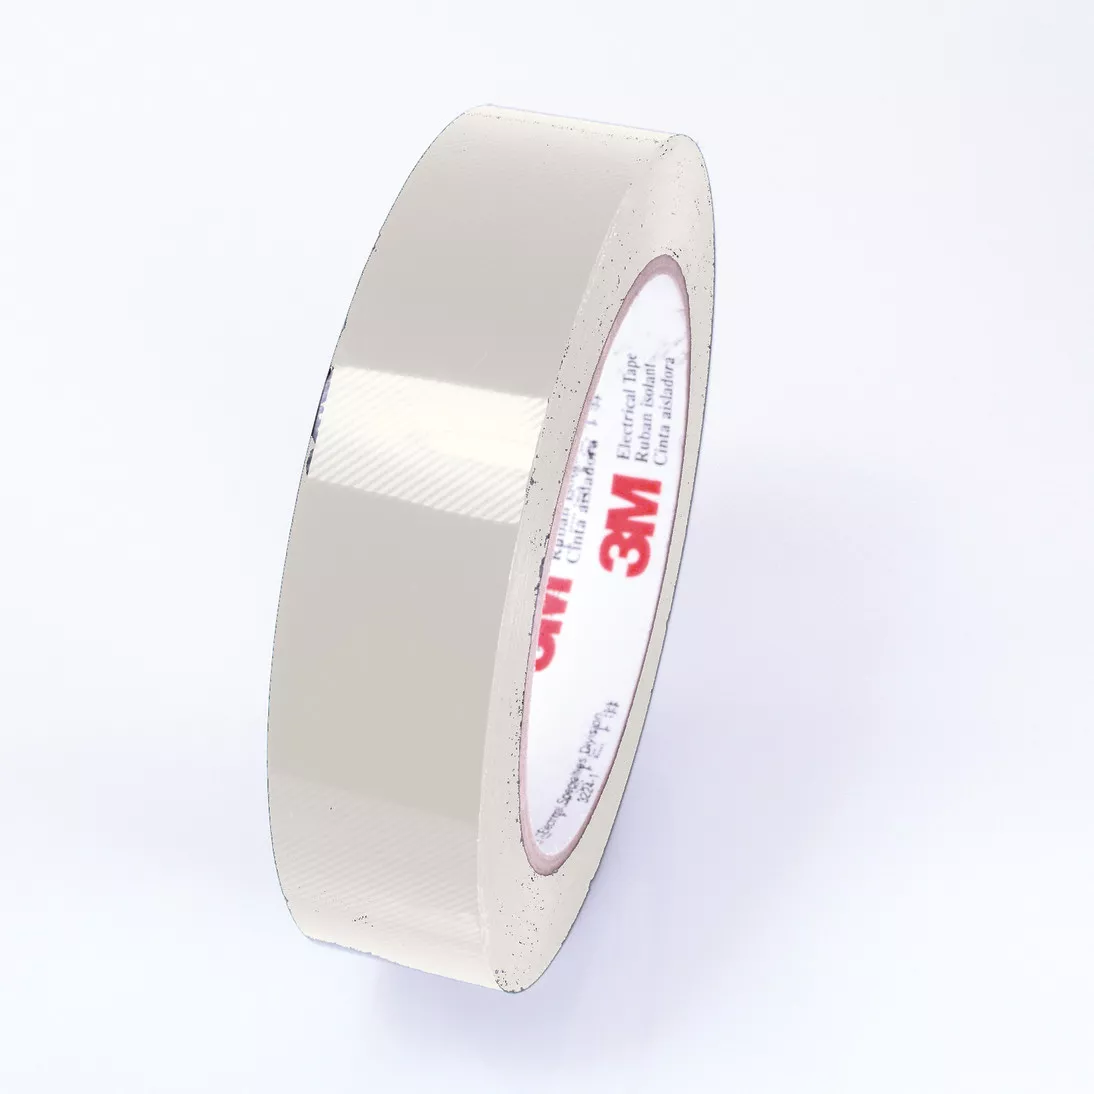 3M™ Polyester Film Electrical Tape 5, 3/4-in x 72 yd, Bulk 3-in plastic
core, (Advance), 48 Rolls/Case